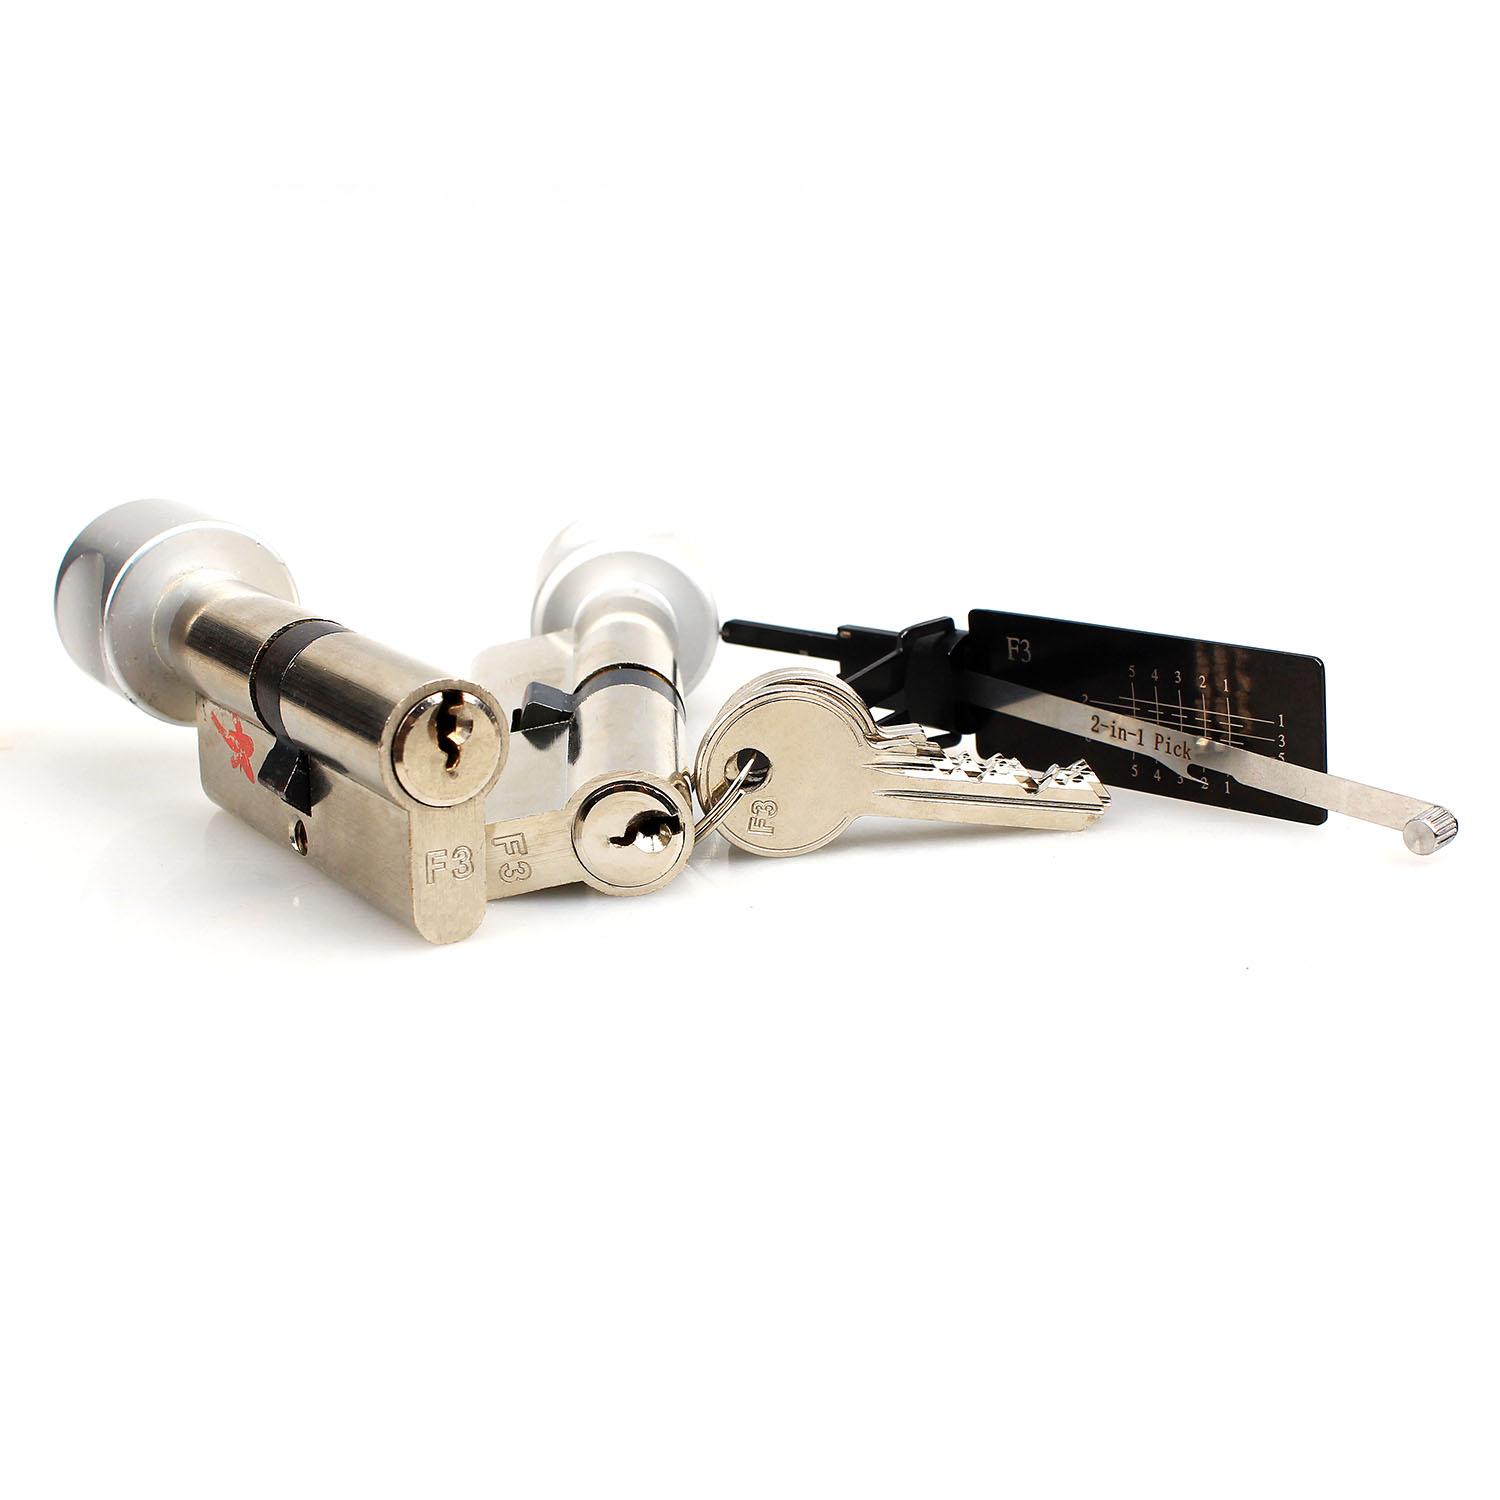 ISEO Pump Lock Decoder ➮ Professional Auto Decoders and locksmith